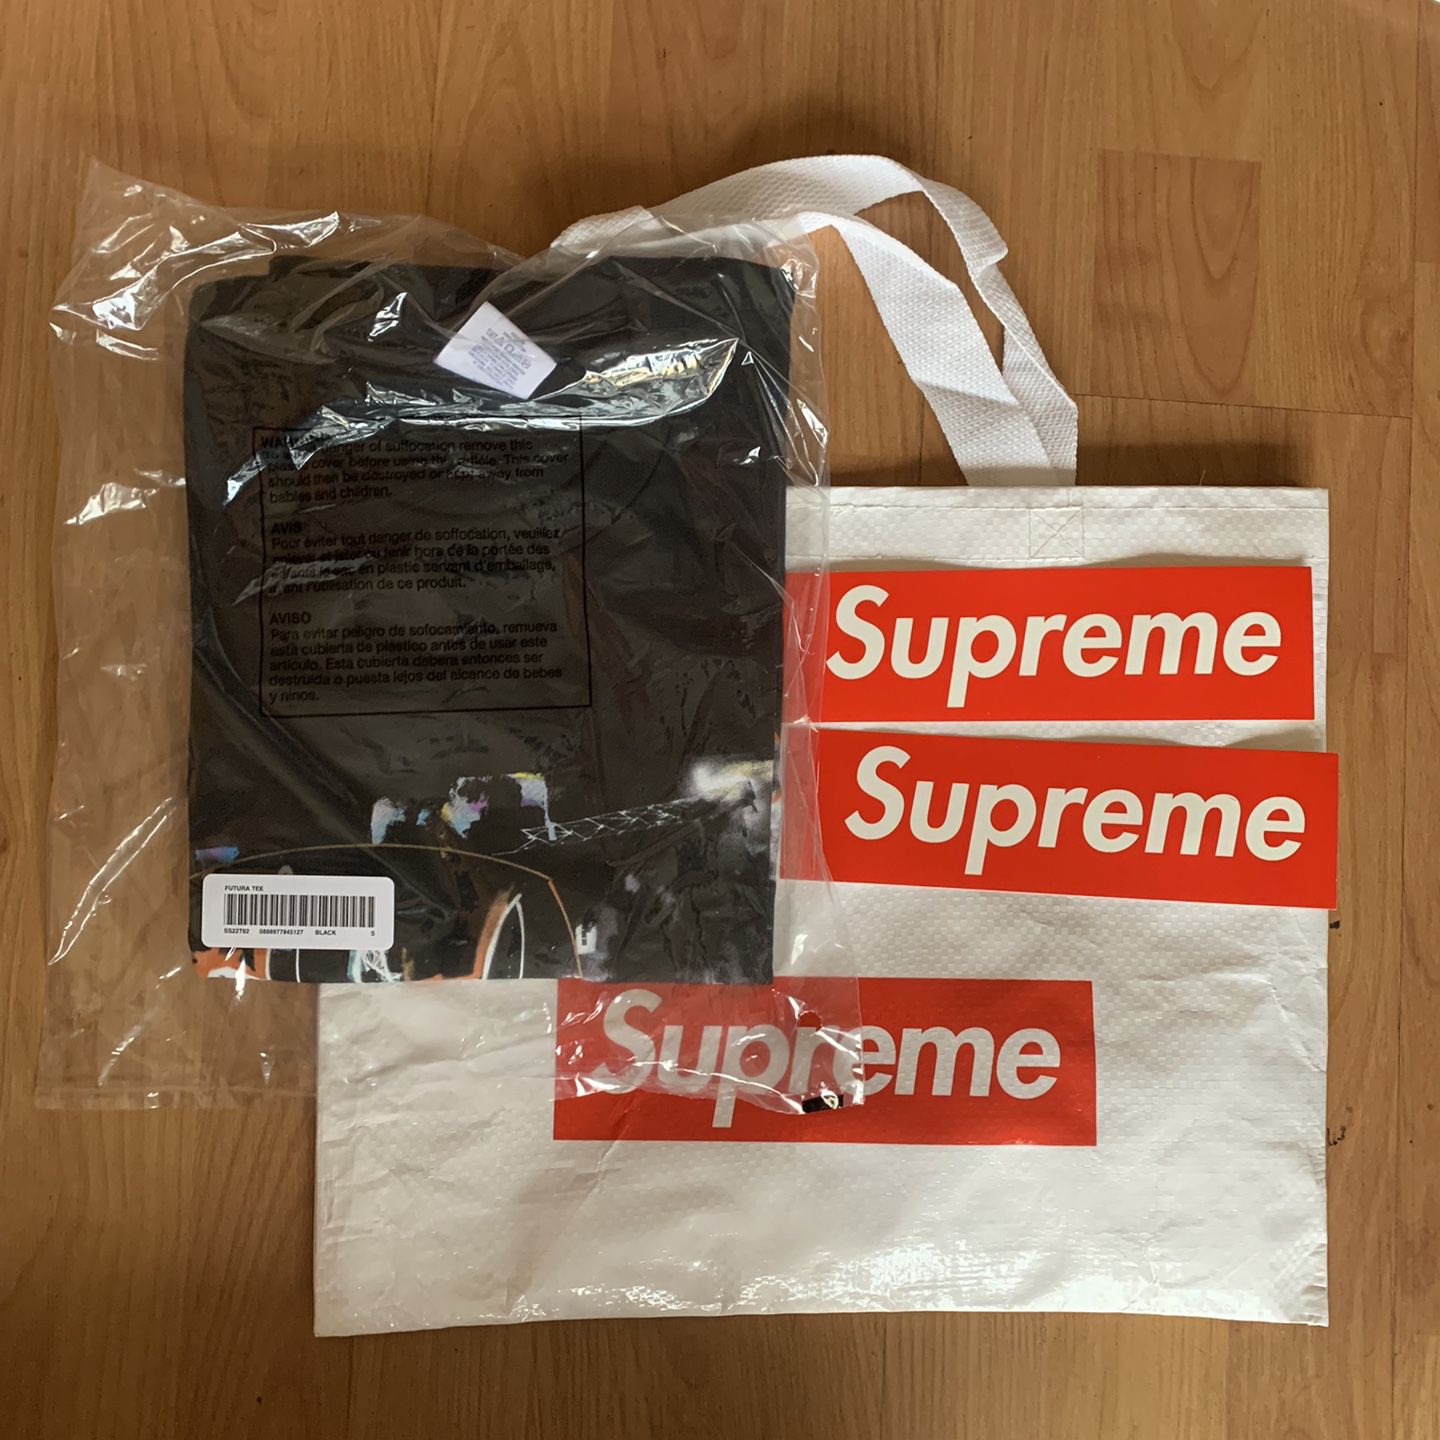 Supreme x Futura Tee - Size Small - Shopping Bag & Stickers